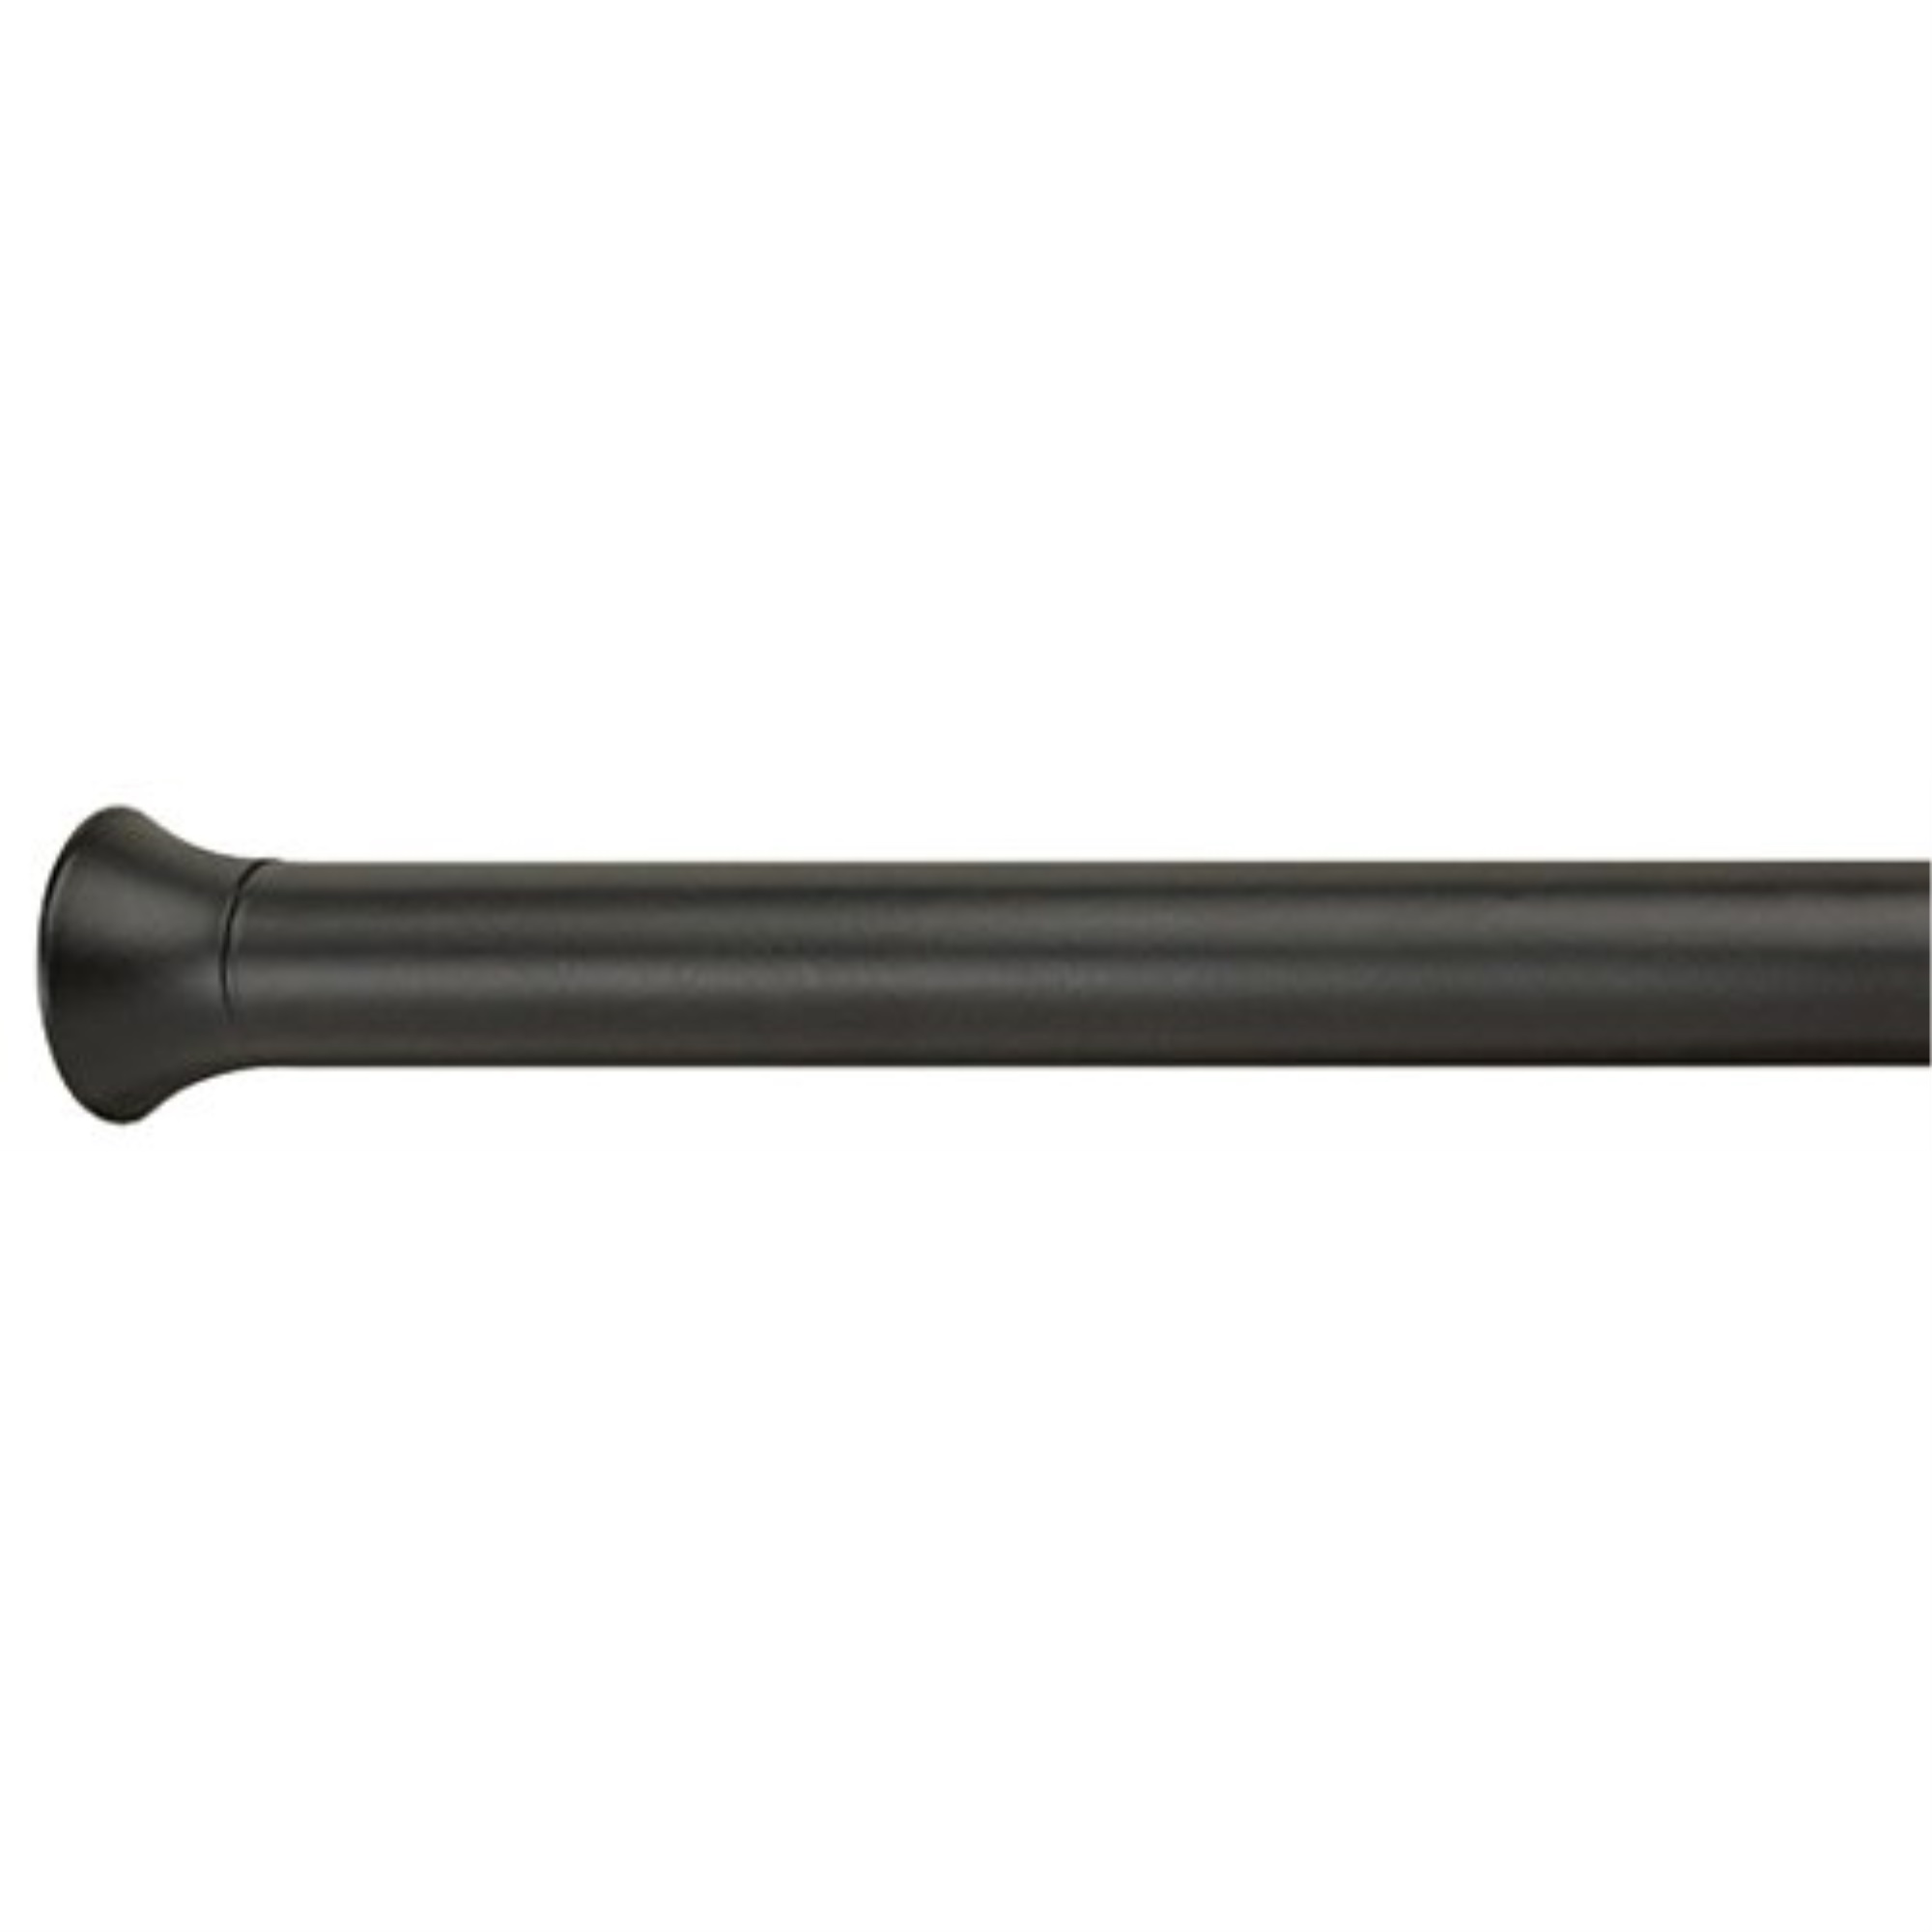 Umbra 6031776 TENSION ROD MATTE 54-90"" Umbra Chroma Matte Black Modern Tension Rod 54 in. L X 90 in. L